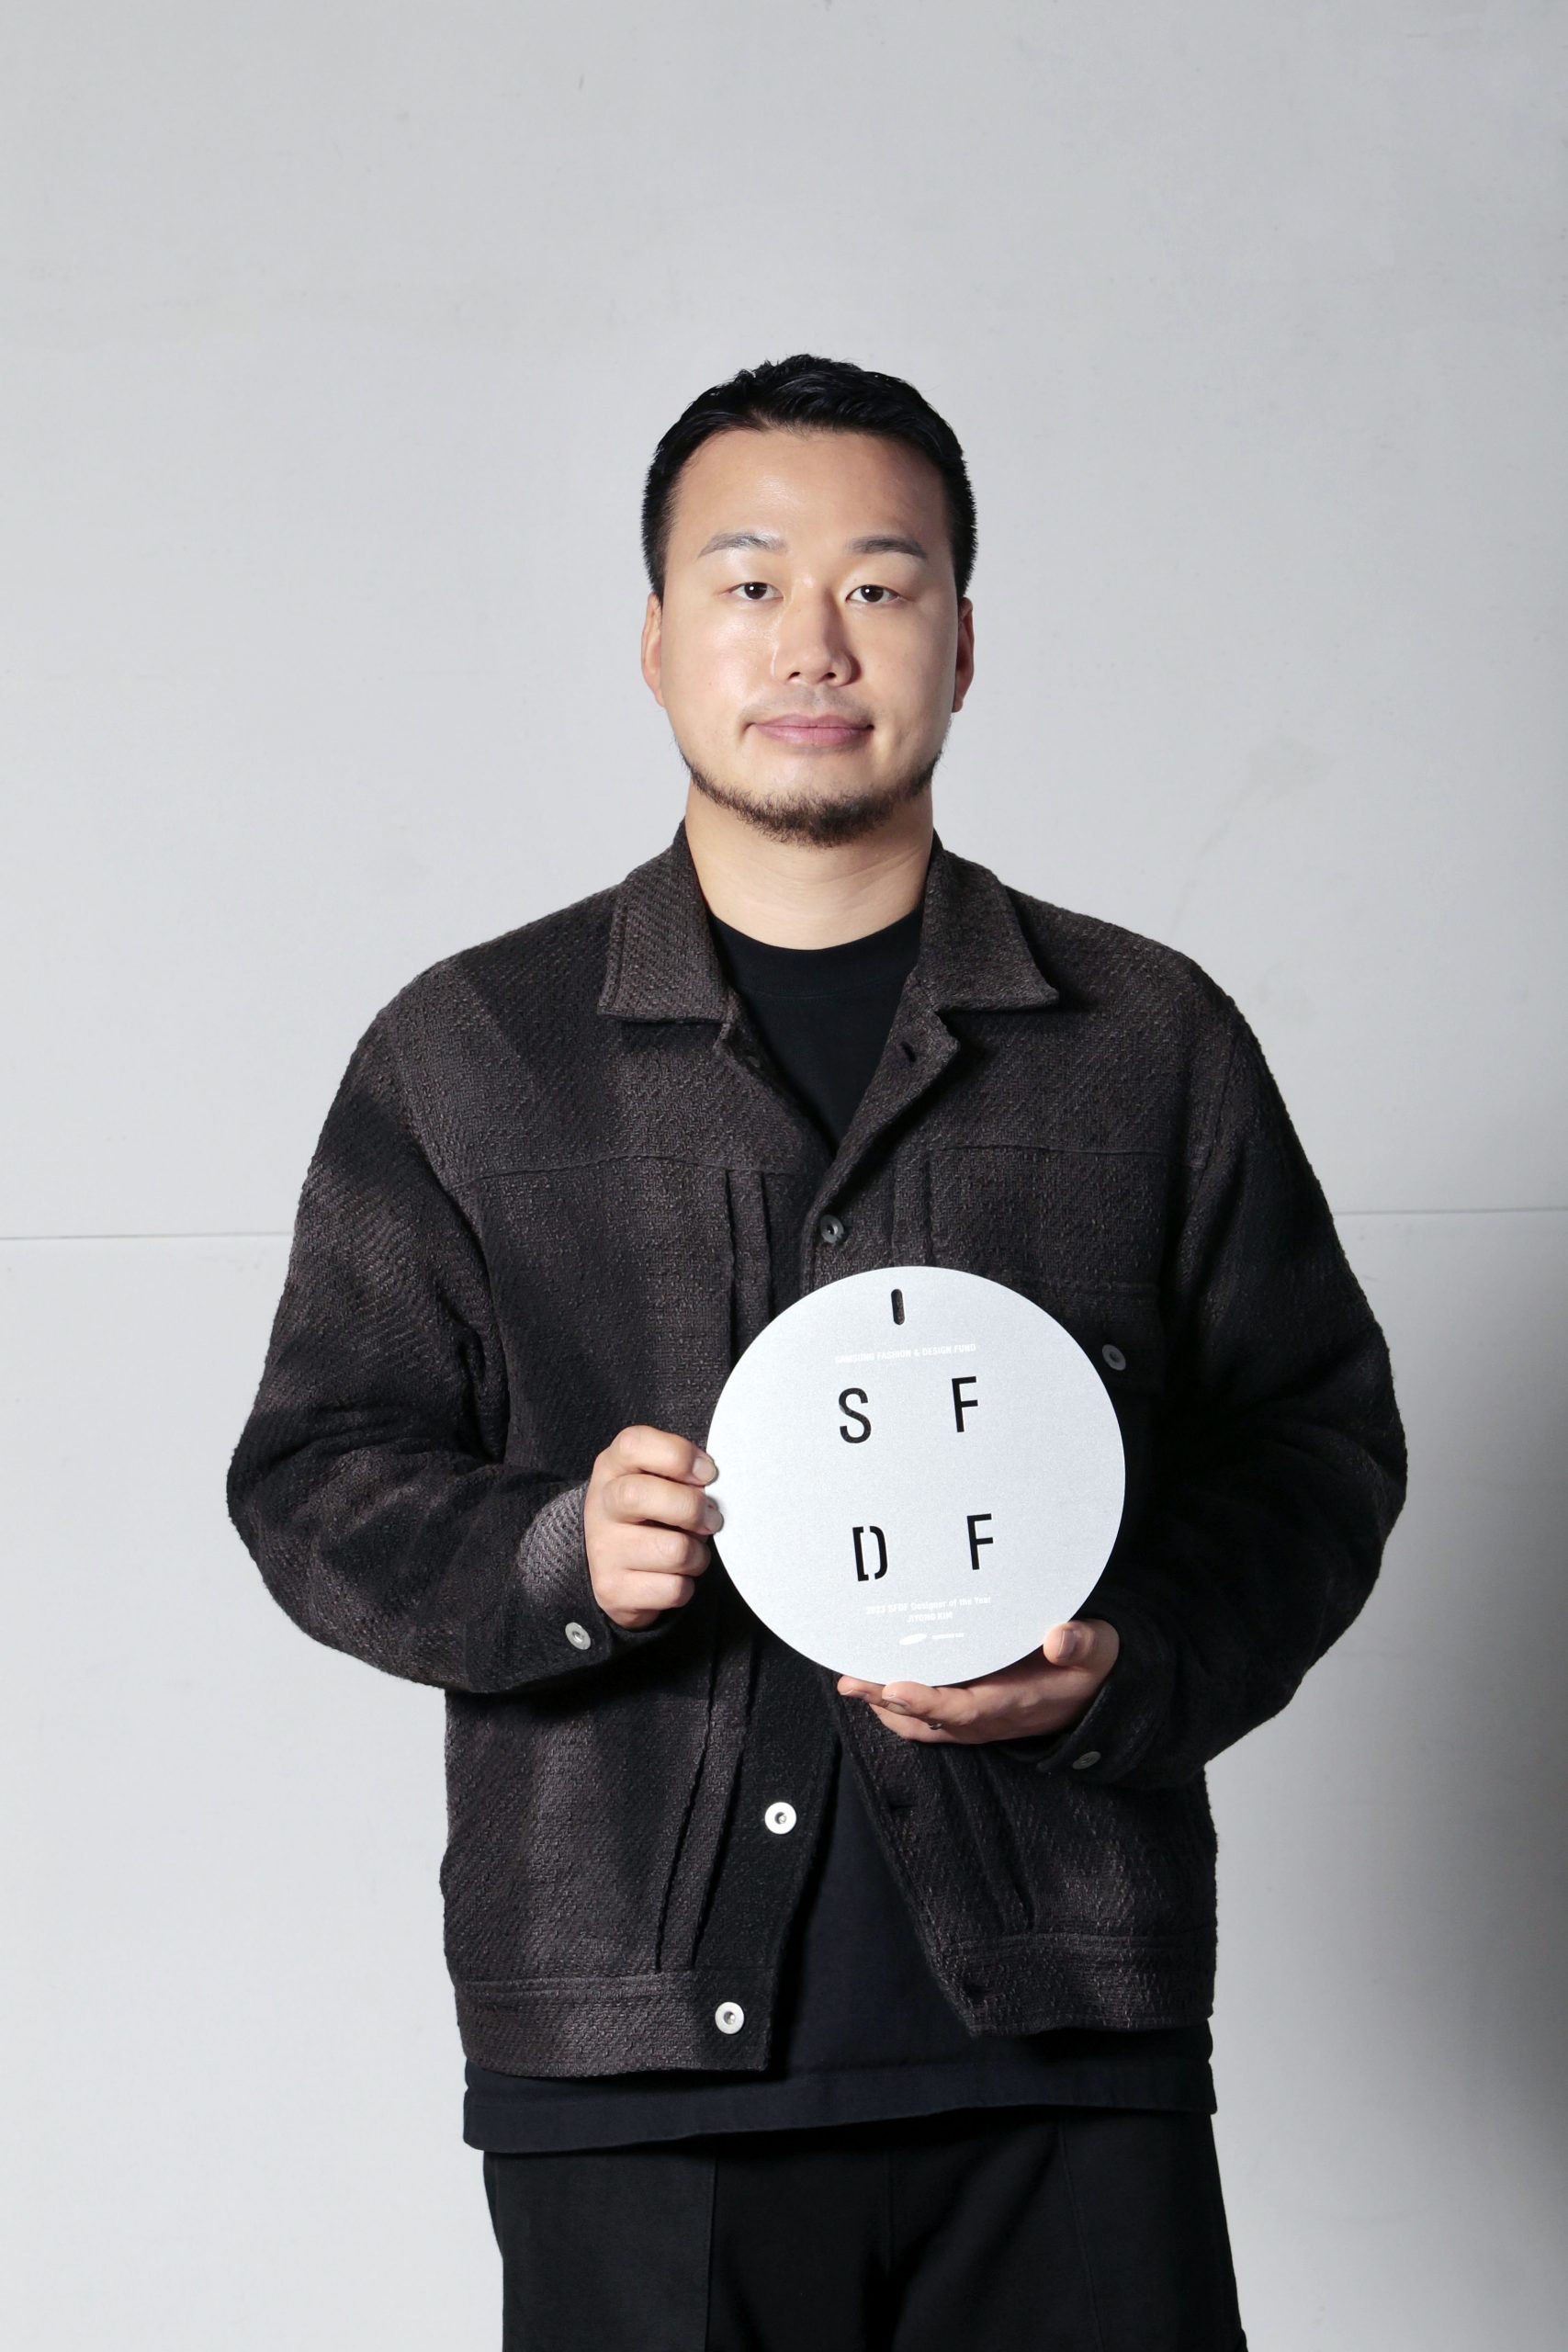 Jiyong Kim has become the winner of the 19th Samsung Fashion Design Fund award.